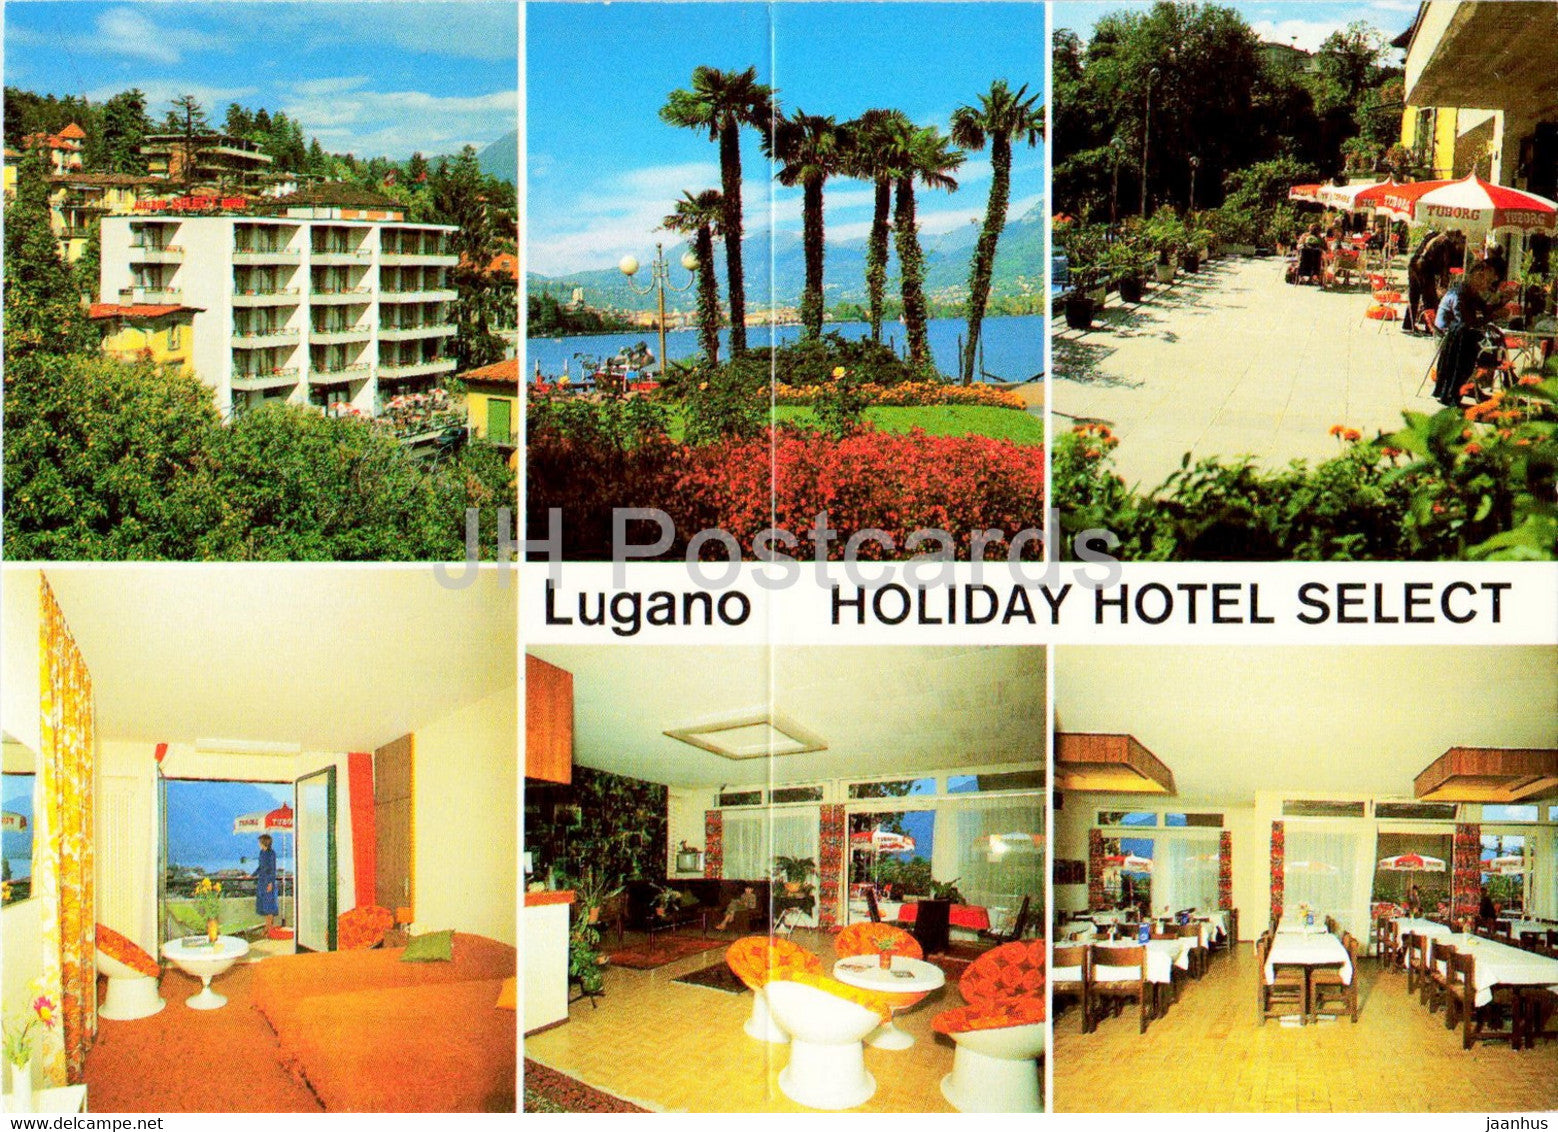 Holiday Hotel Select - Lugano - Switzerland - unused - JH Postcards